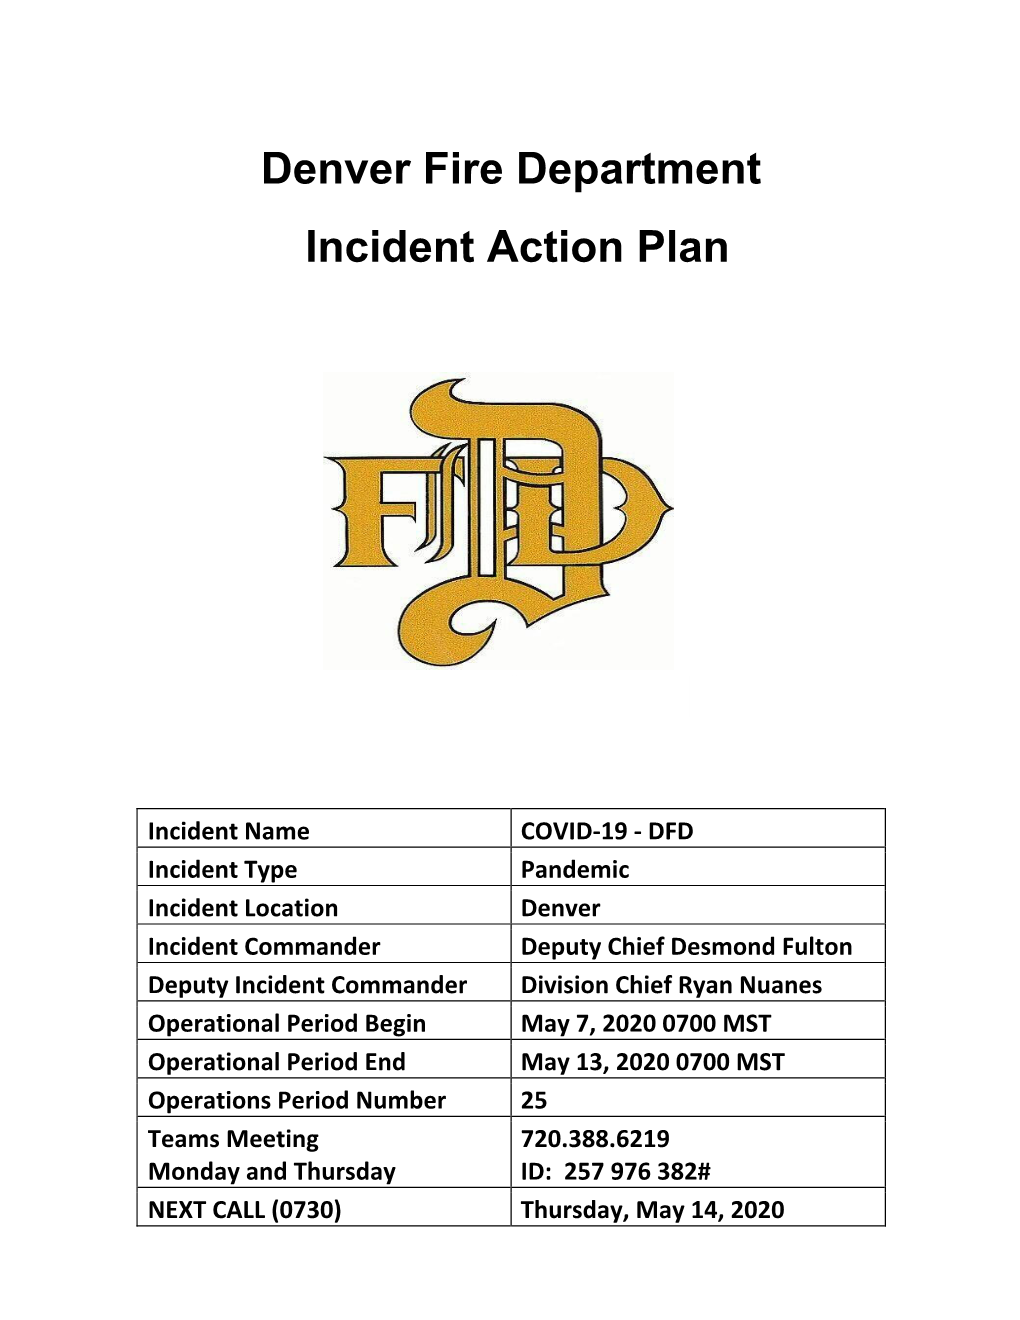 Denver Fire Department Incident Action Plan